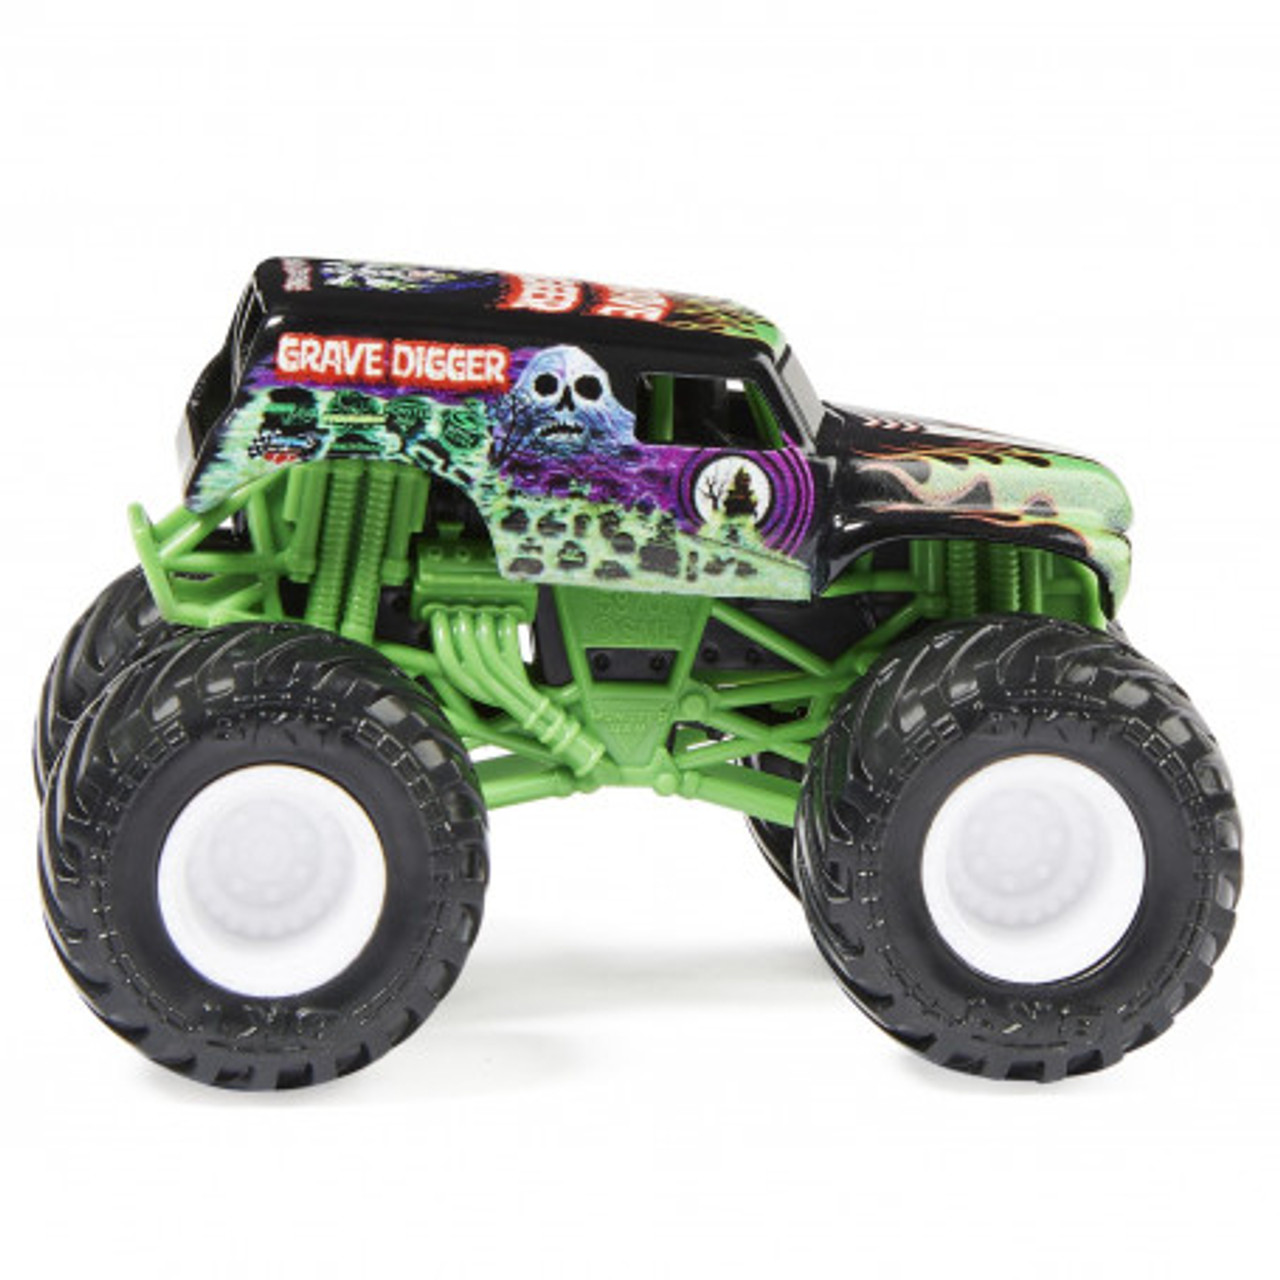 Meccano Junior, Official Monster Jam Grave Digger Monster Truck STEM Model  Building Kit with Pull-back Motor, Kids Toys for Ages 5 and up